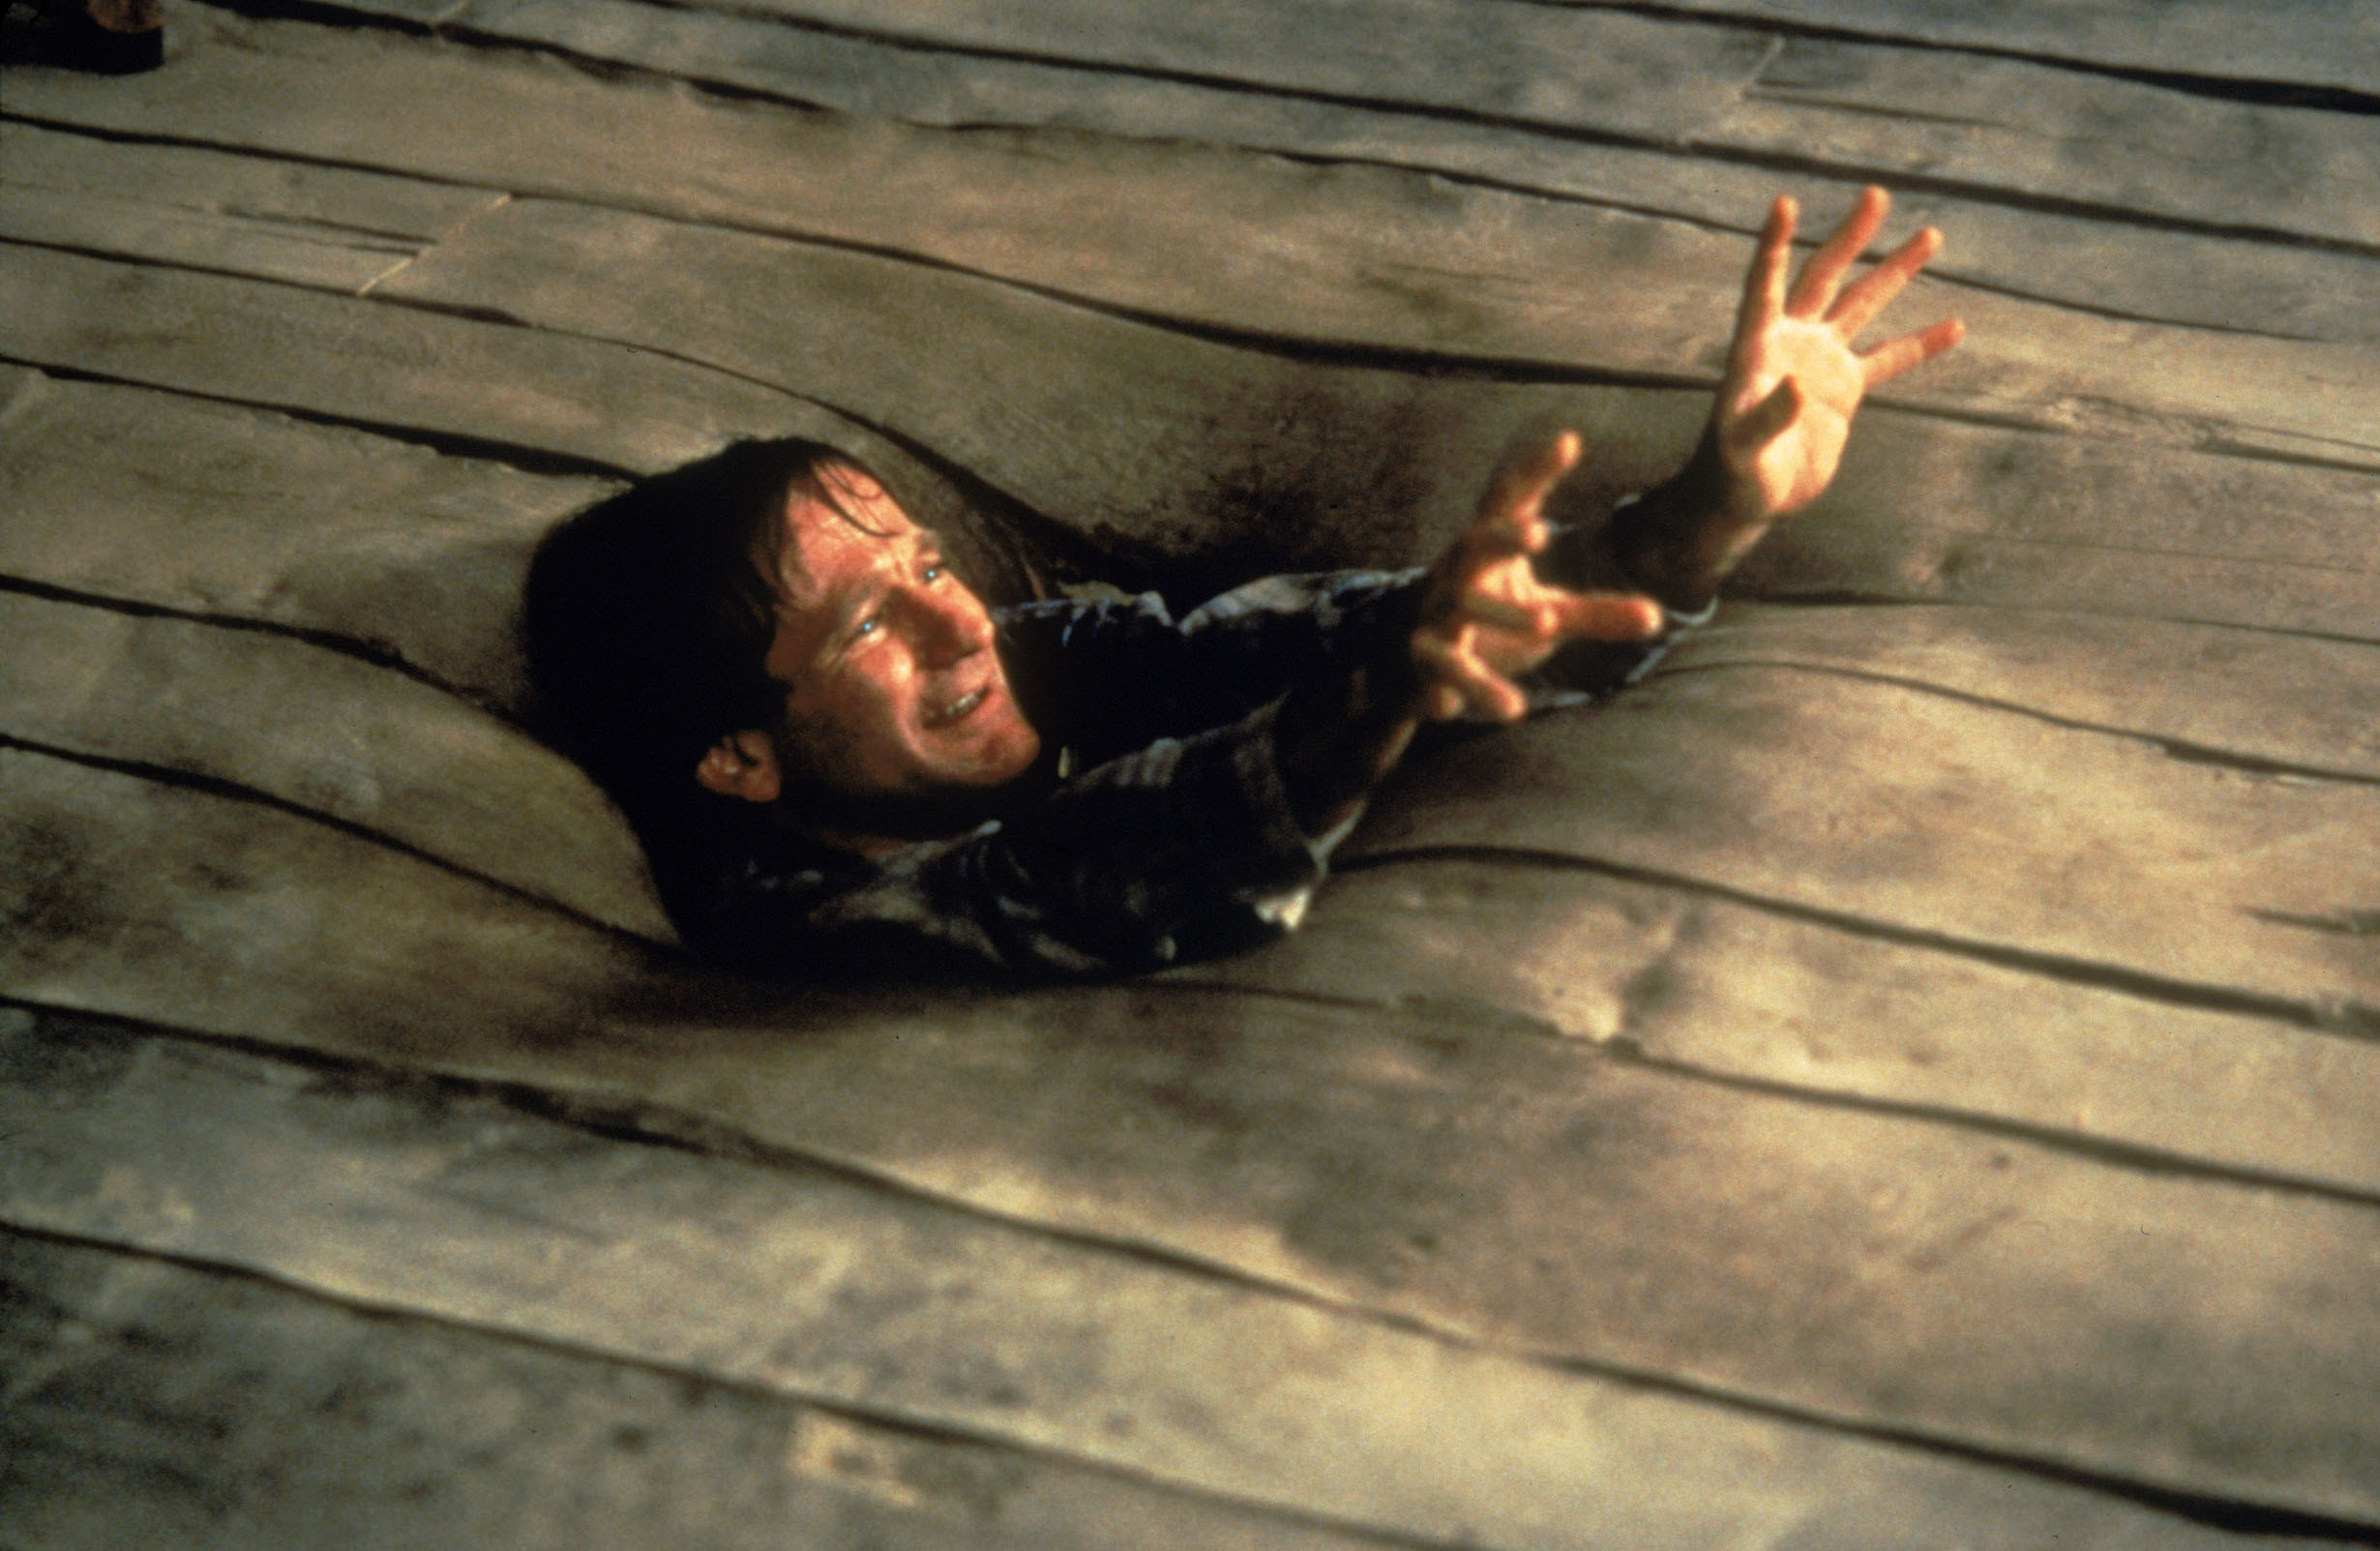 Robin Williams sinking into the floor